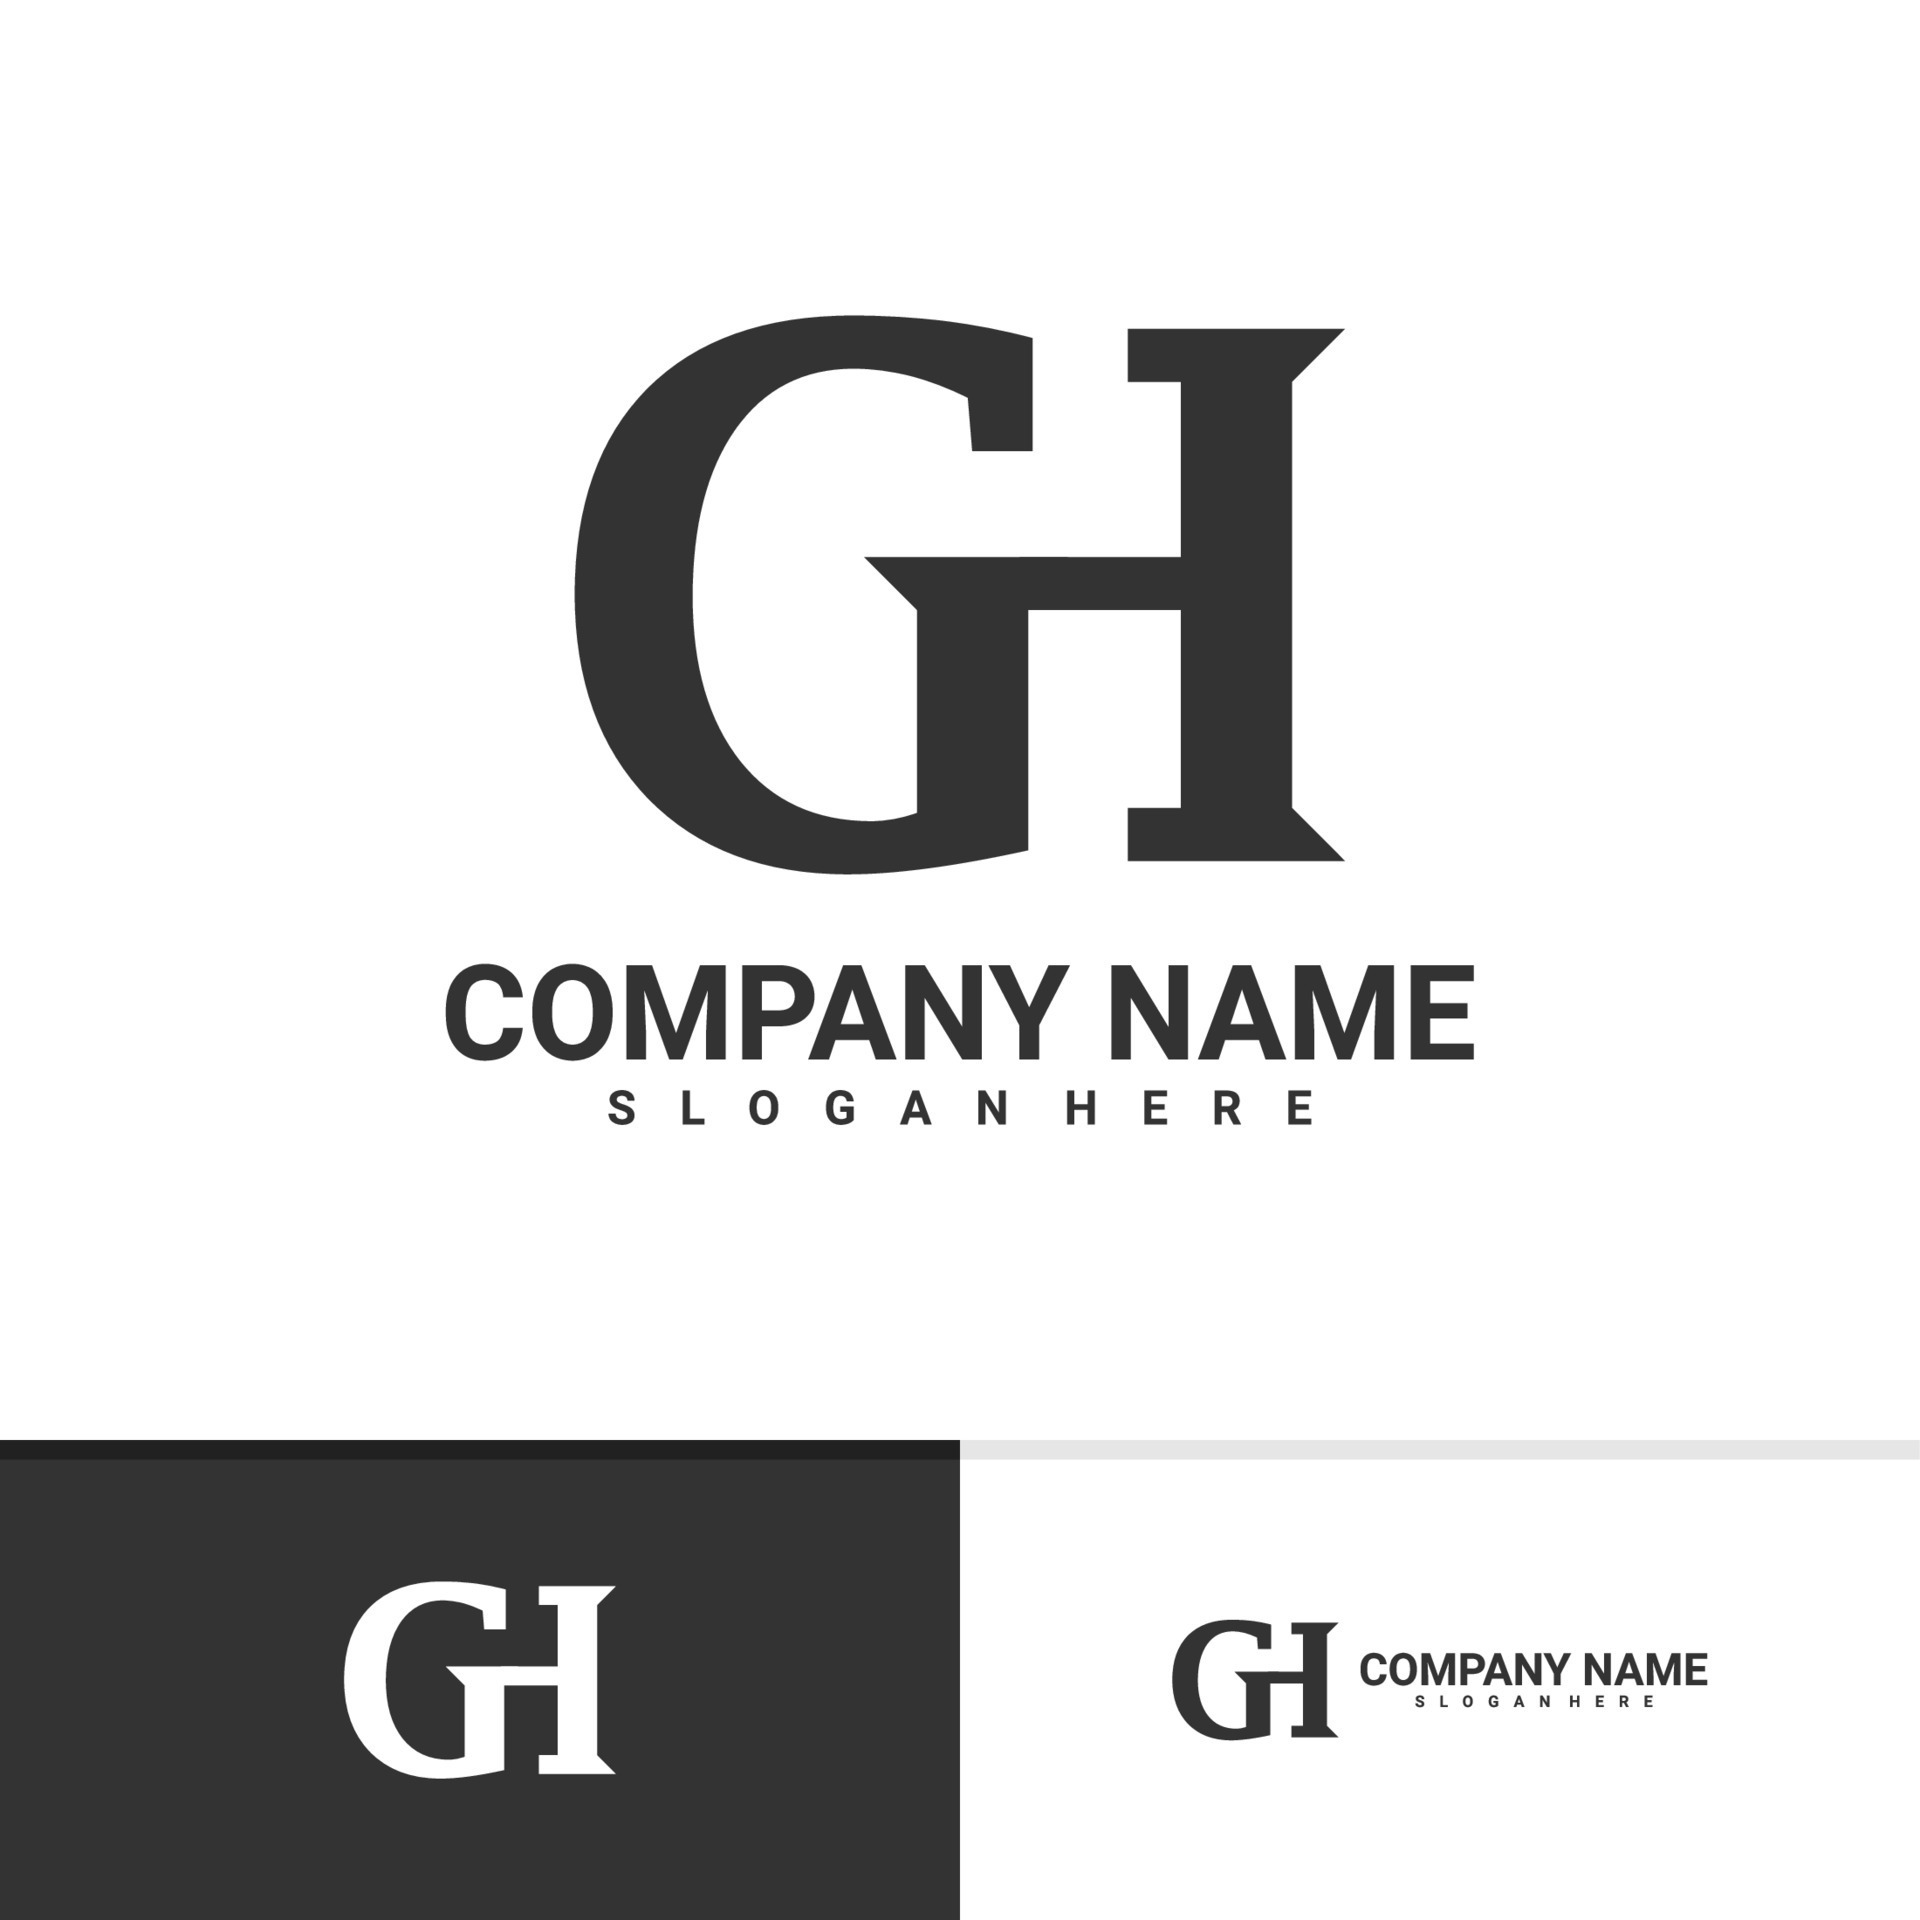 GH updated logo | Lucas Lee